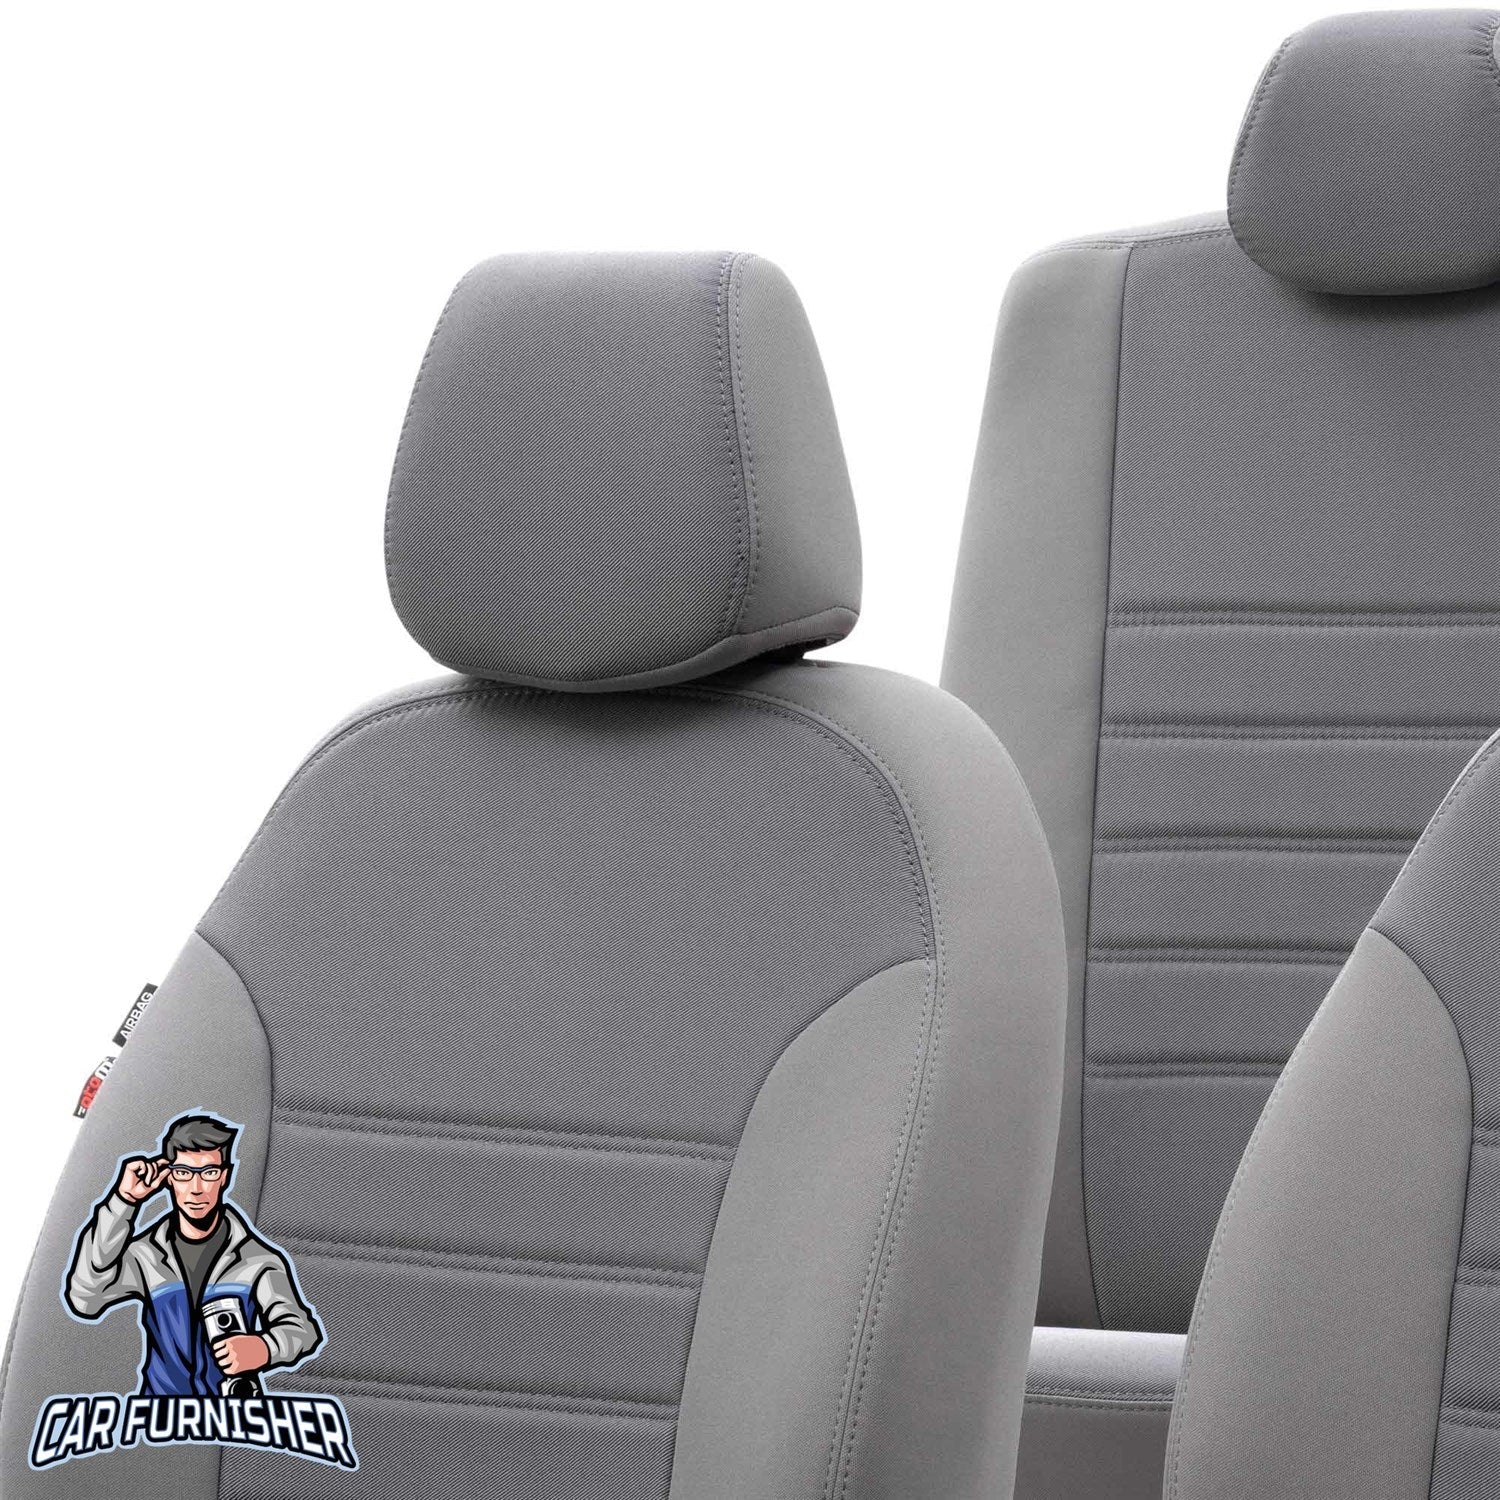 Volkswagen Golf Seat Cover Original Jacquard Design Gray Jacquard Fabric